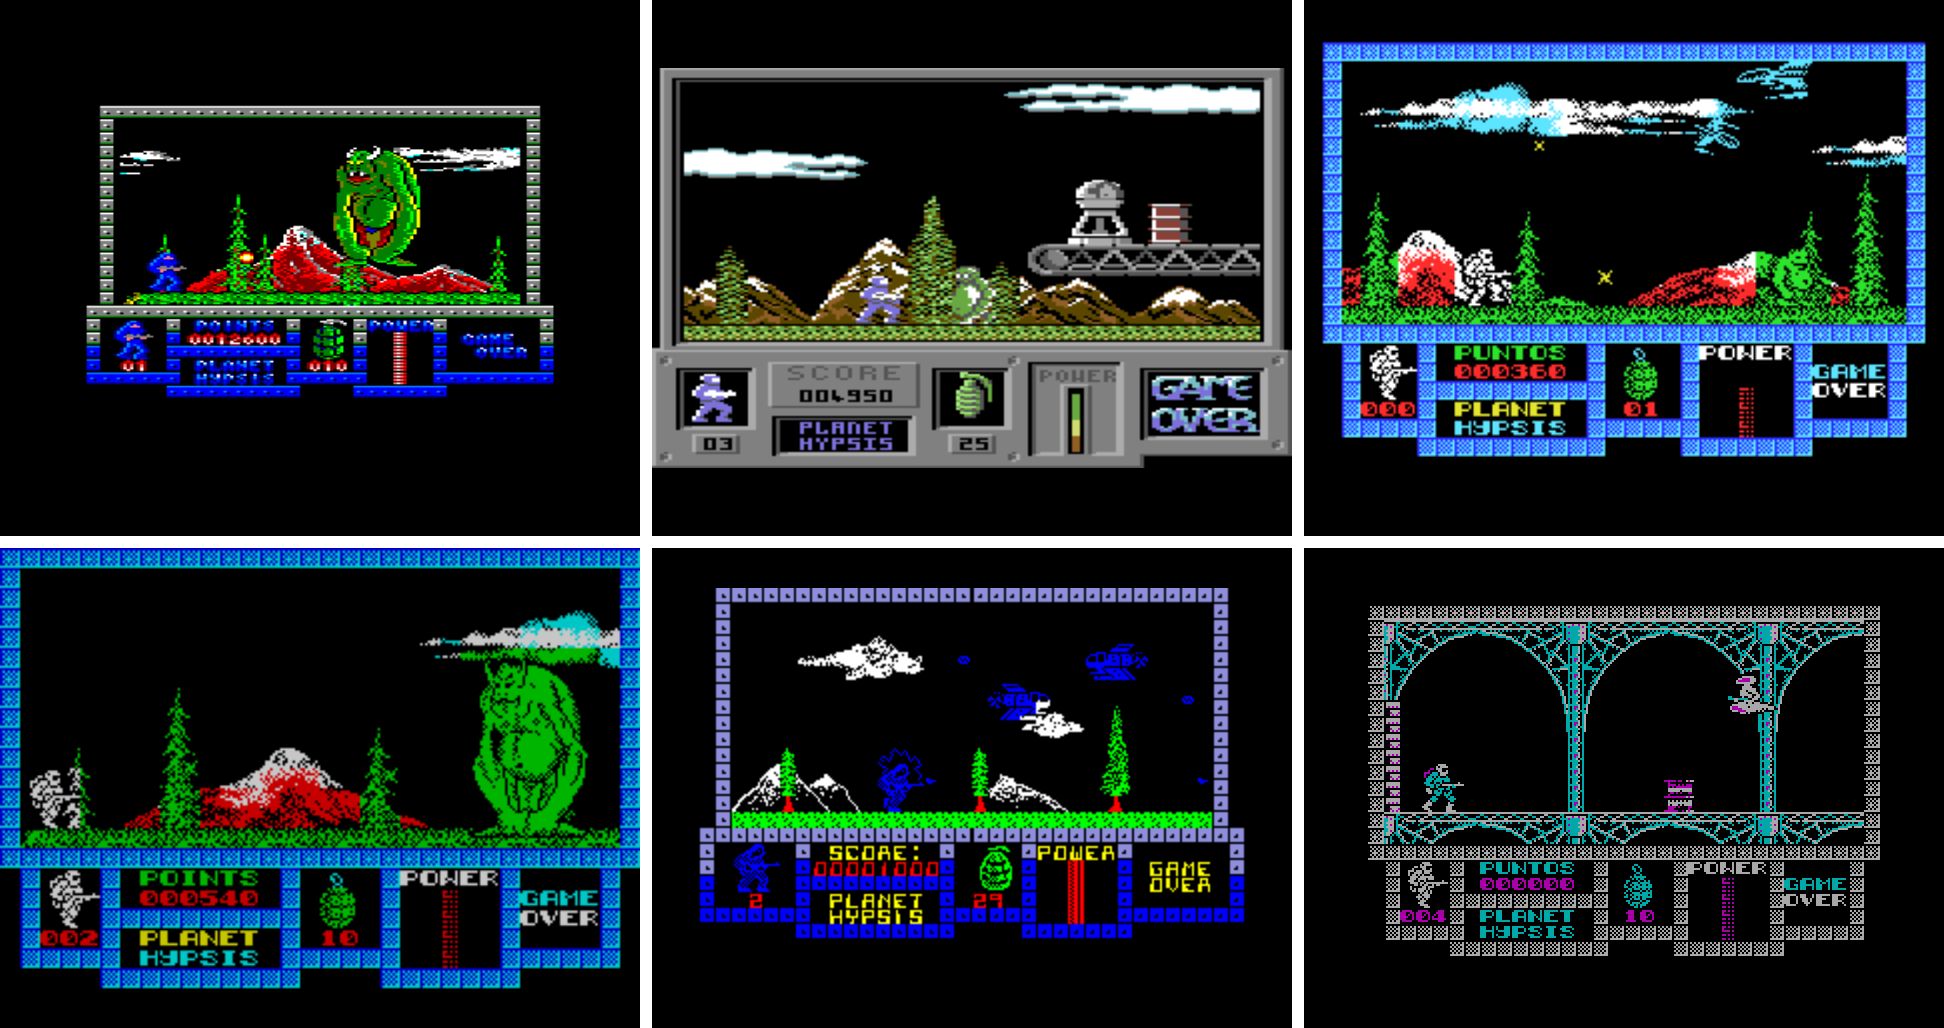 Image For Post | Amstrad - C64 - MSX
Spectrum - Thomson TO - PC